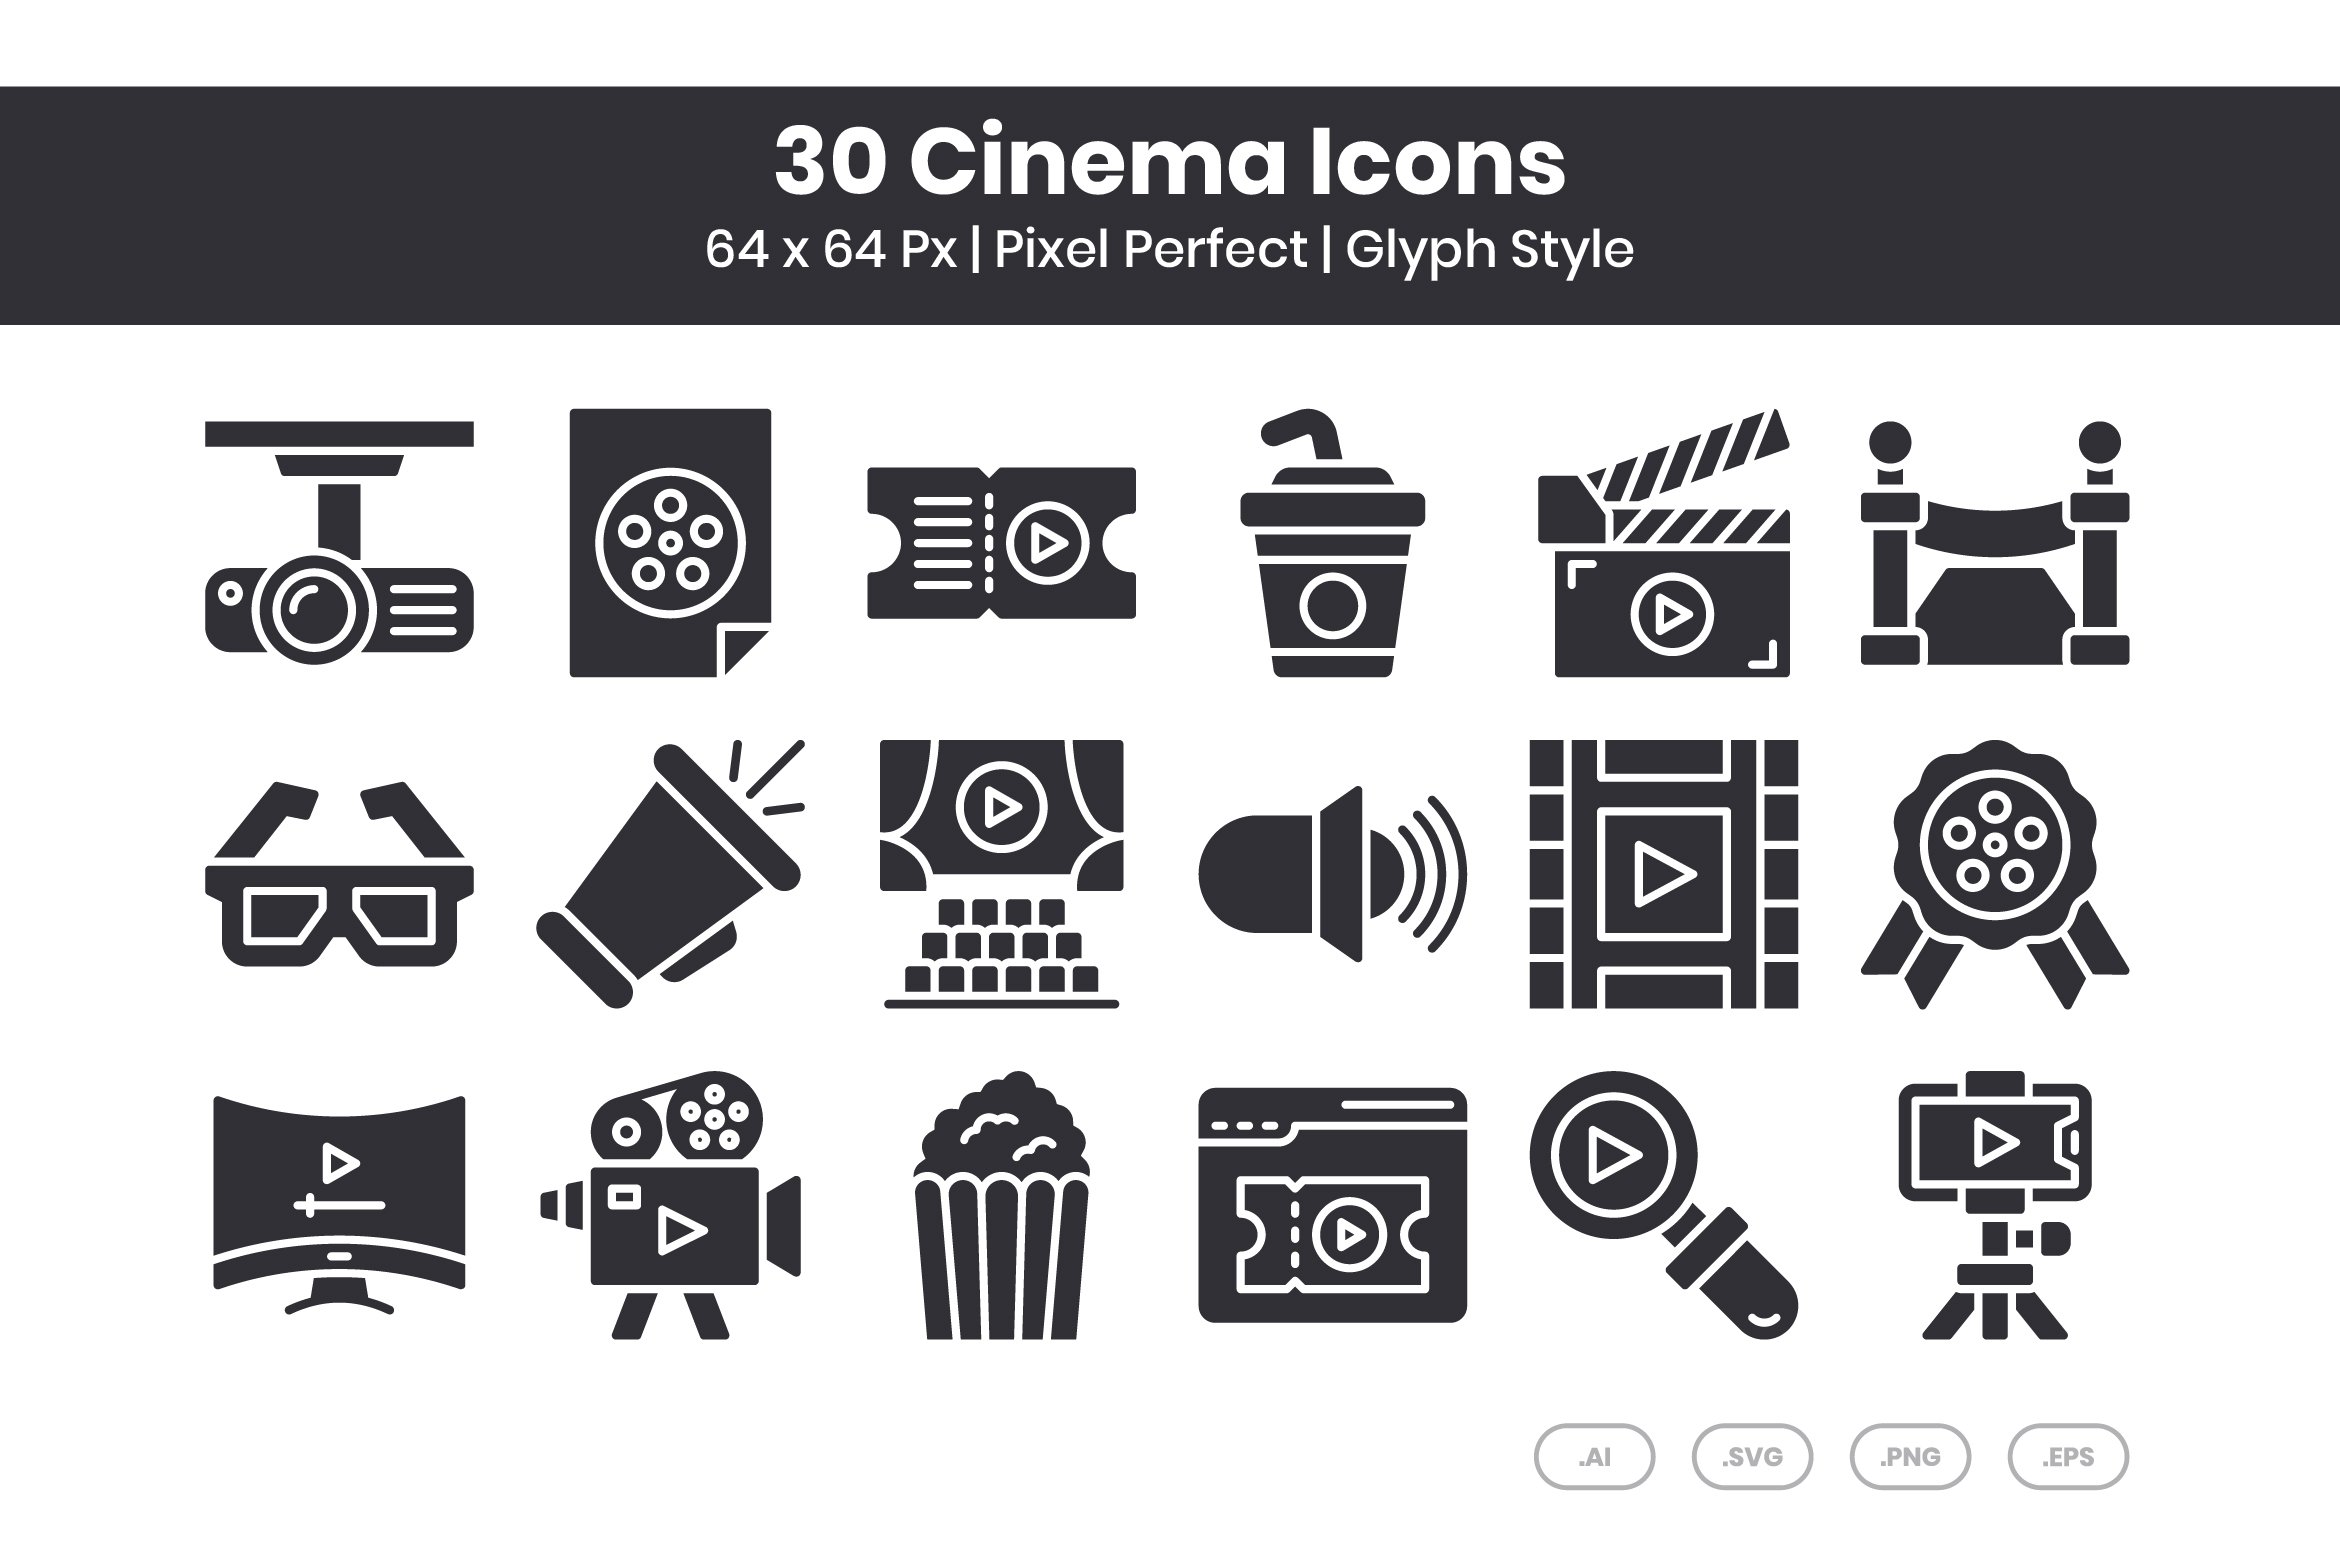 30 Cinema - Glyph cover image.